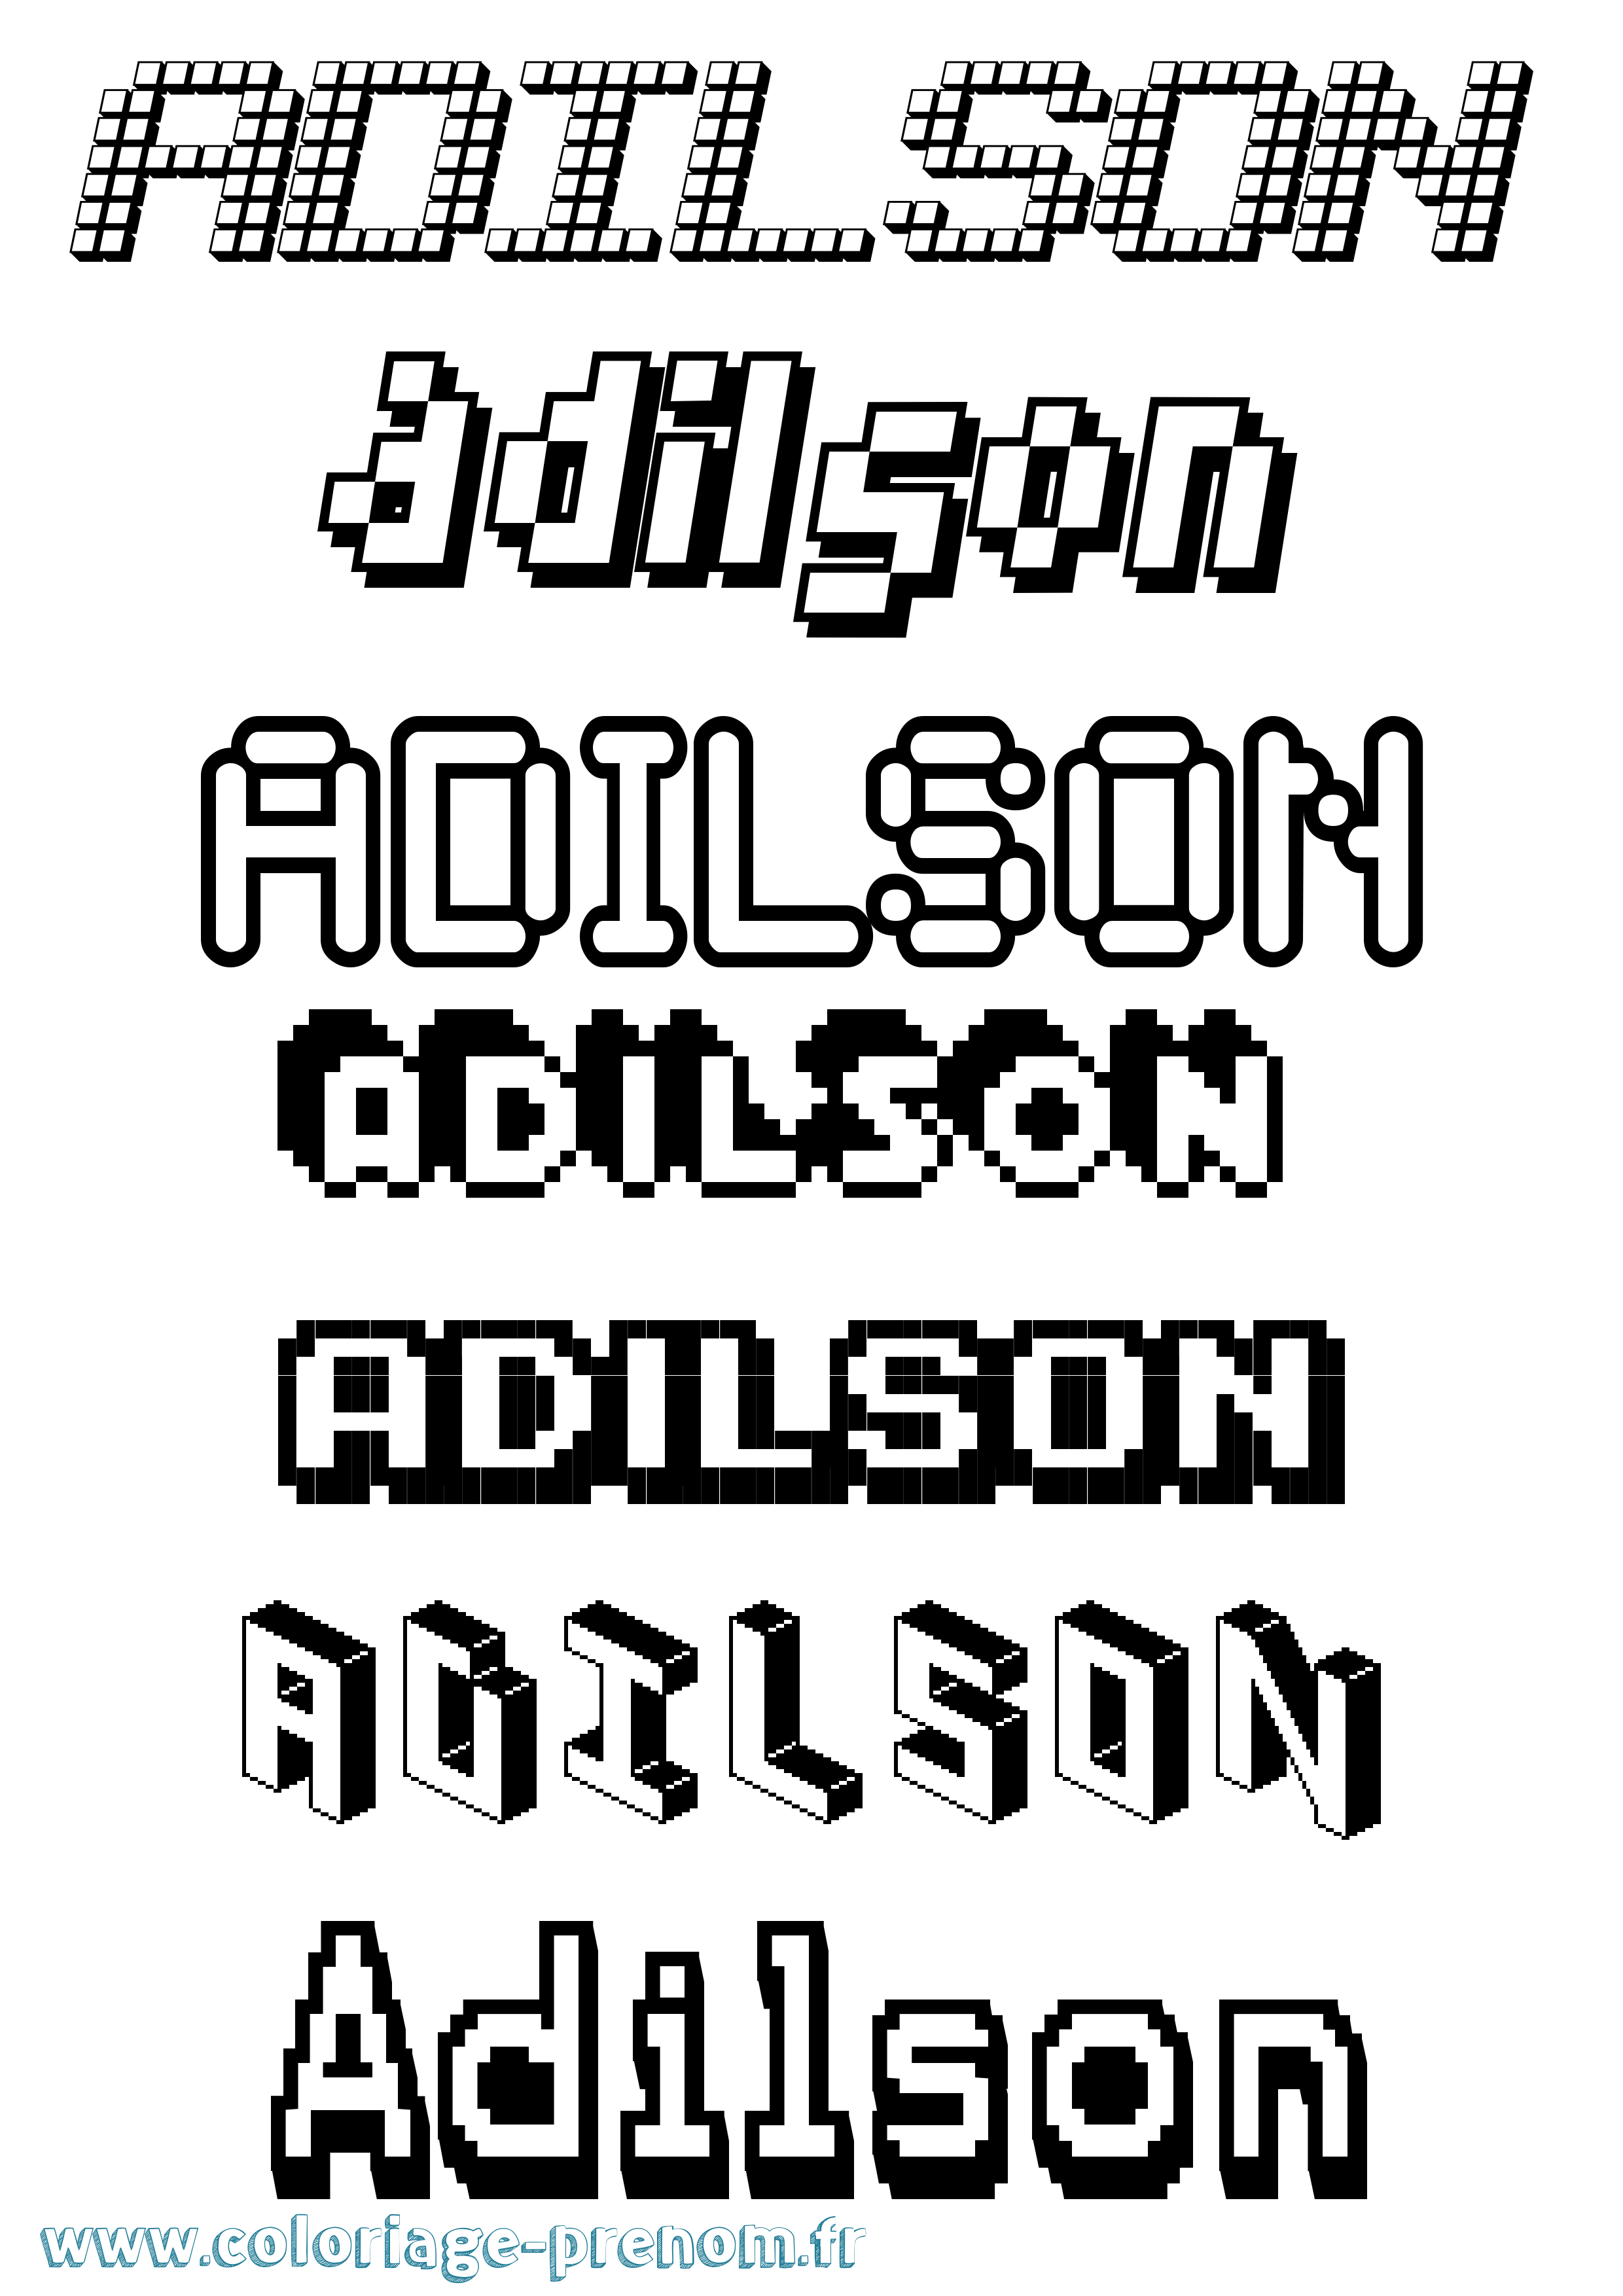 Coloriage prénom Adilson Pixel